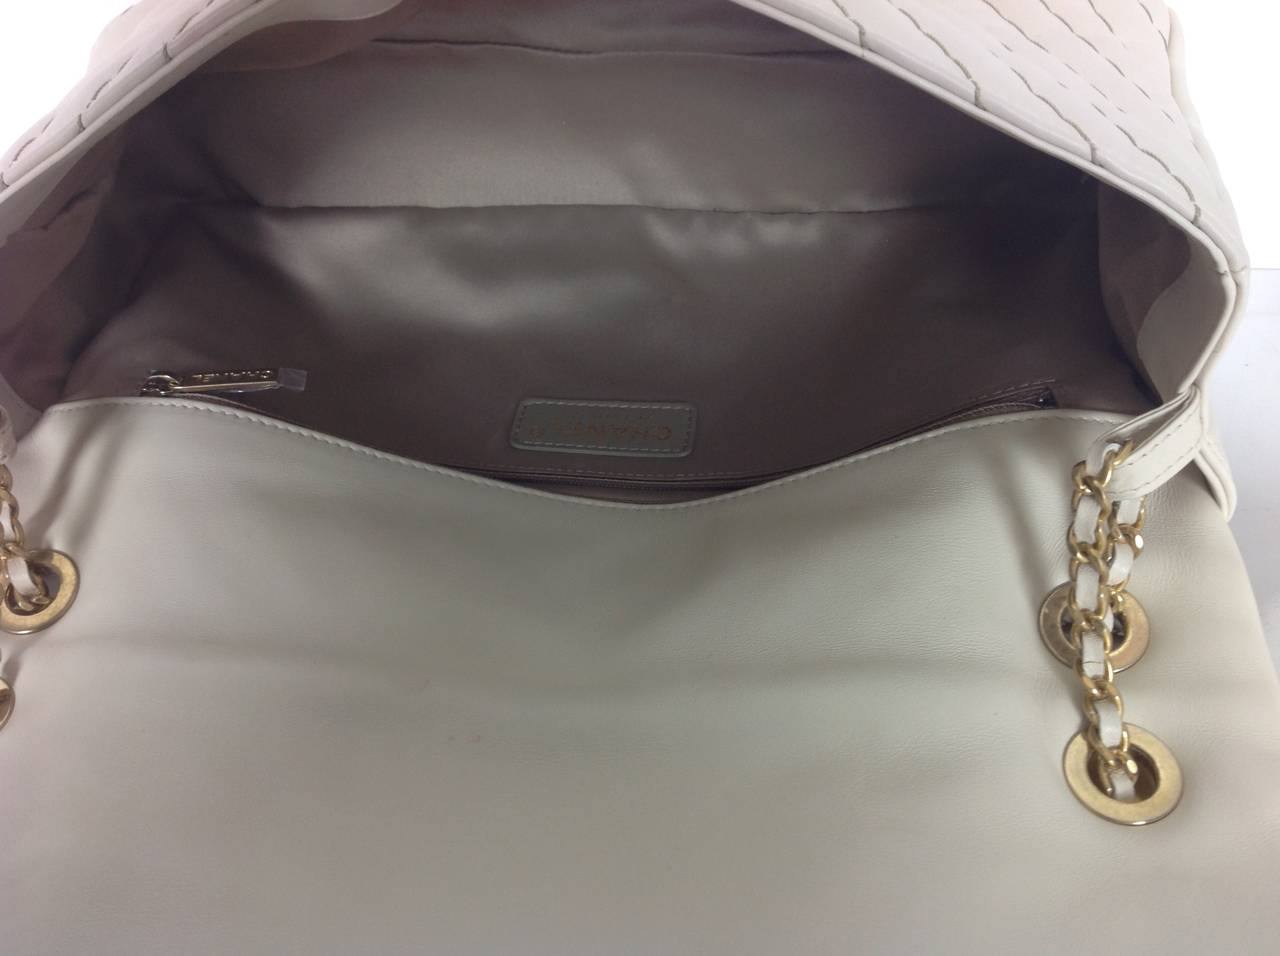 Cream Chanel Chevron Handbag with charms 4